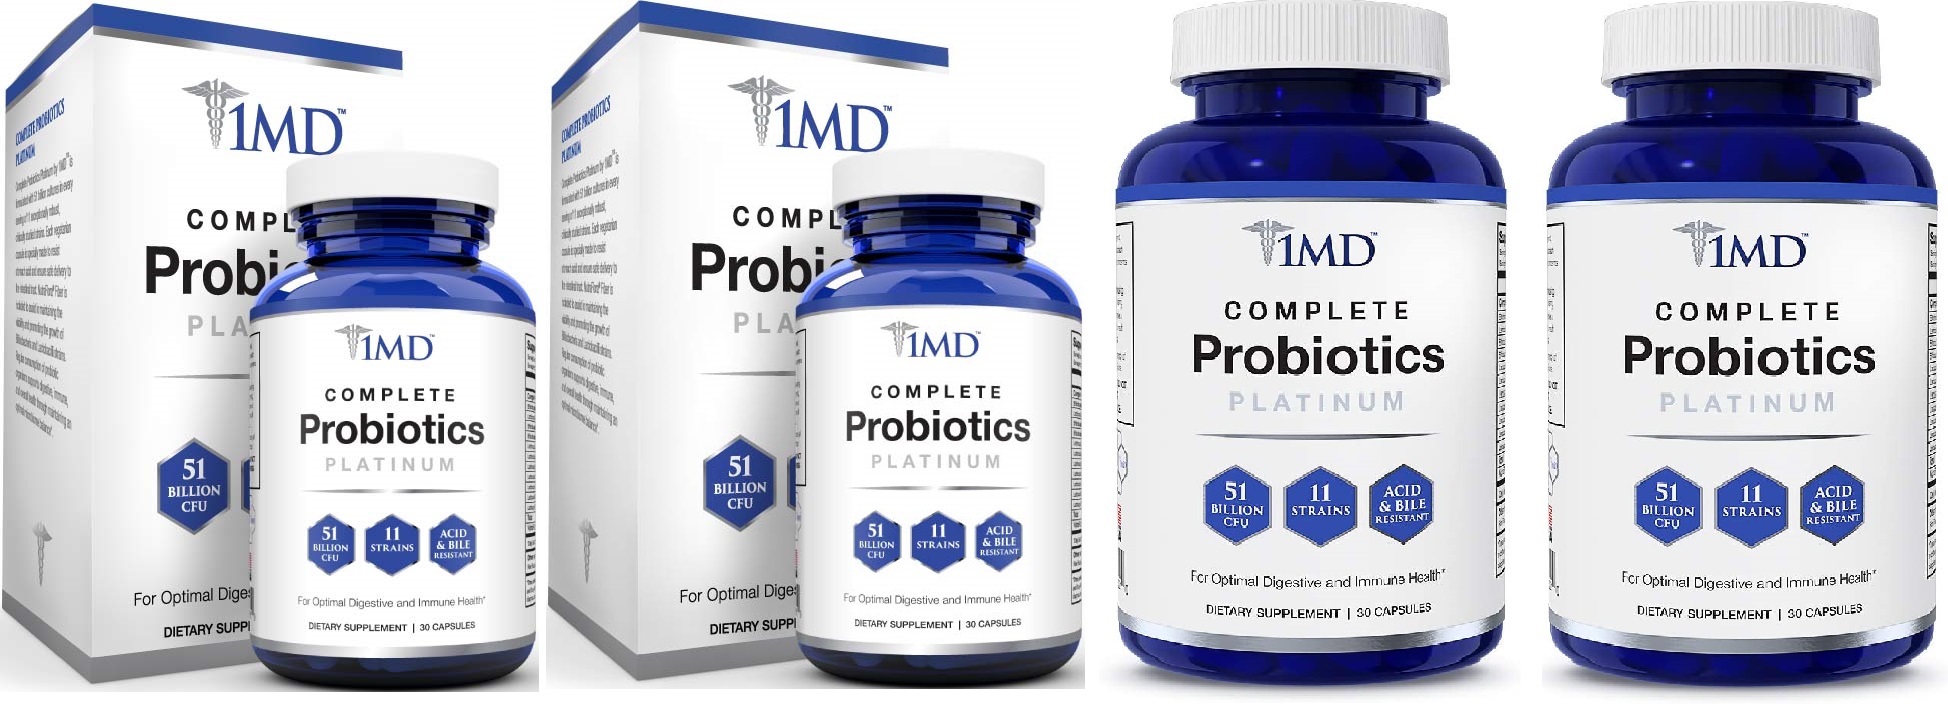 1md Complete Probiotics Platinum Review